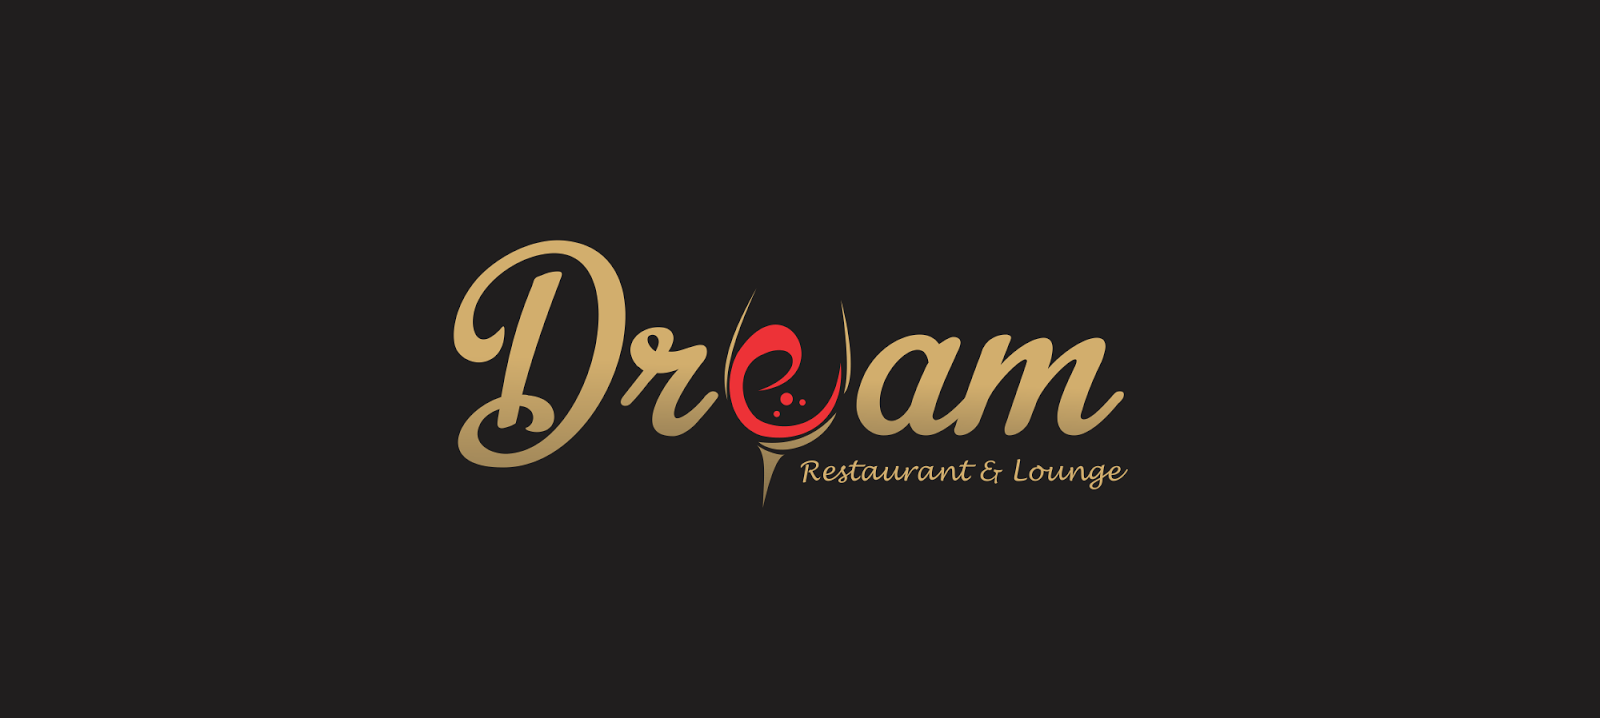 Lounge and Restarant Logo - Simple restaurant and lounge logo design Ehroo